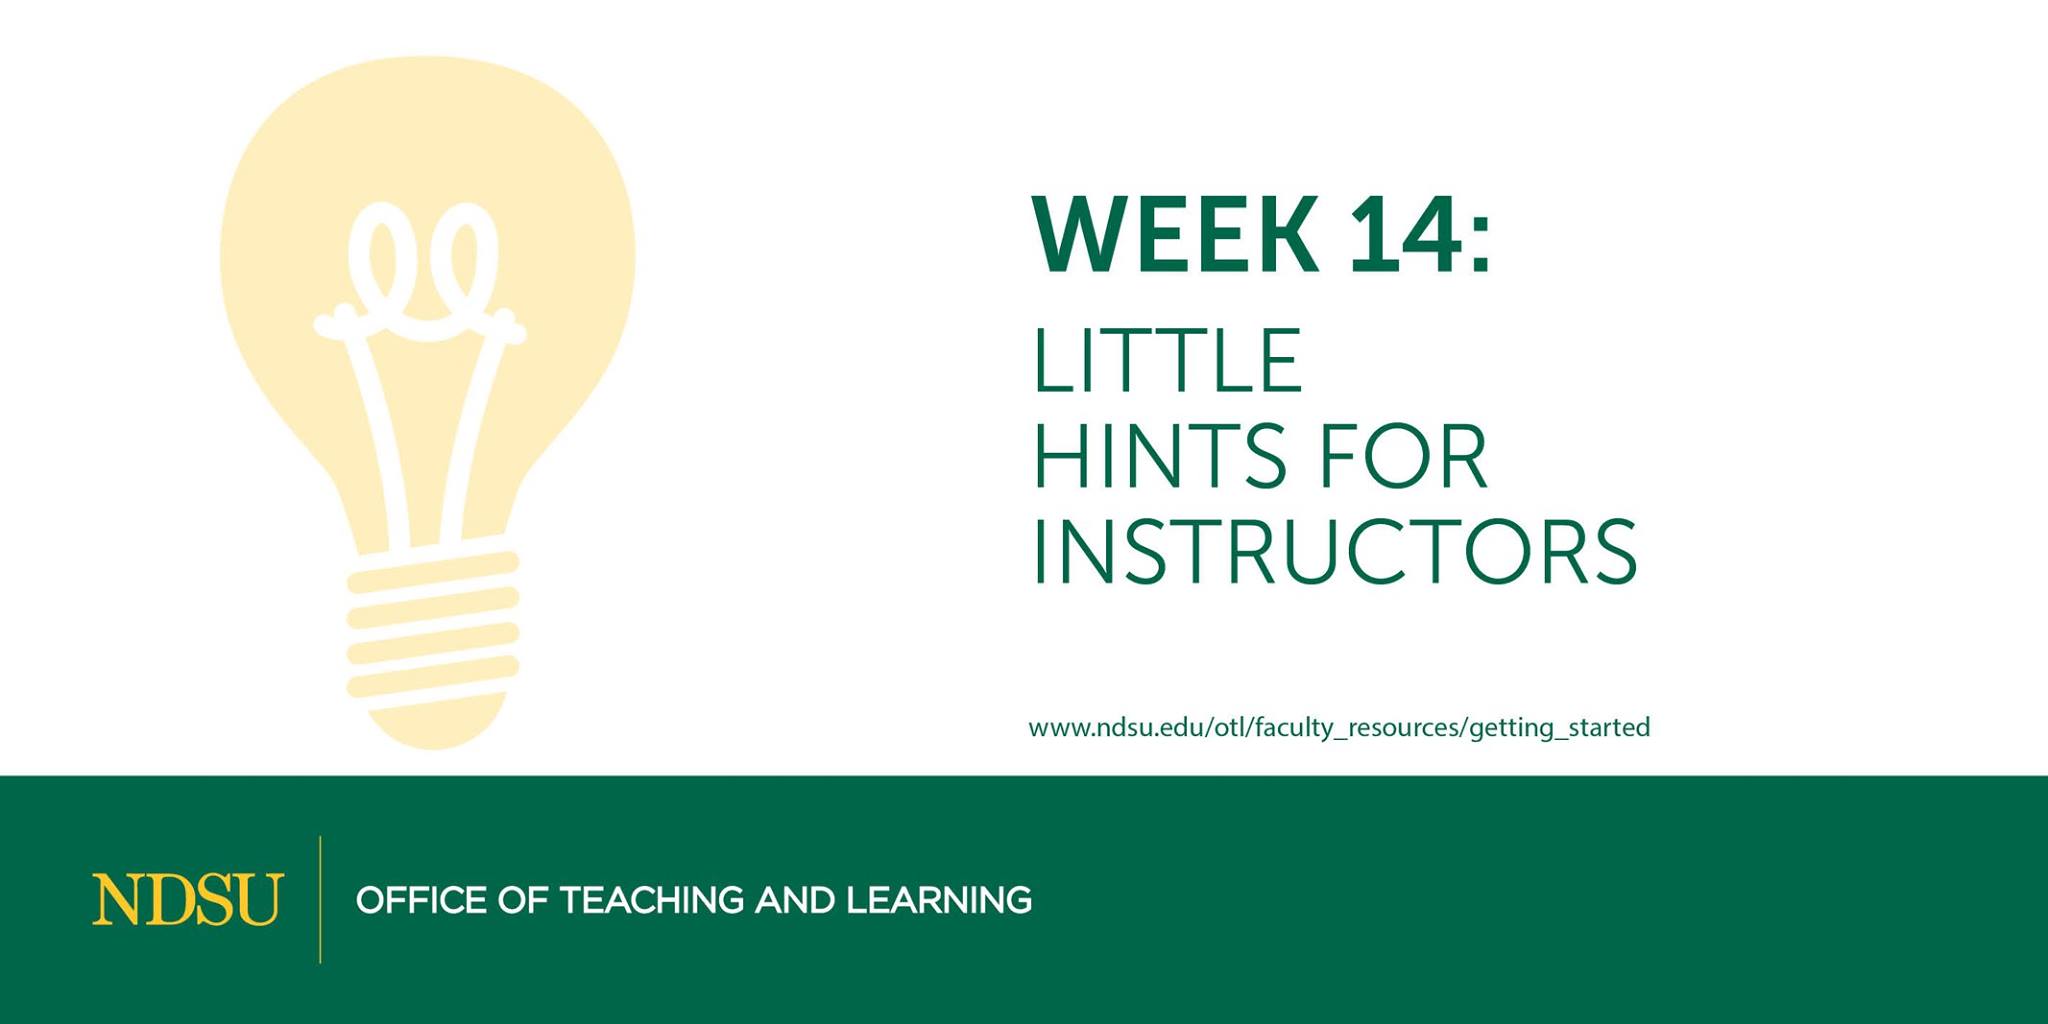 Week 14 Little Hints for Instructors